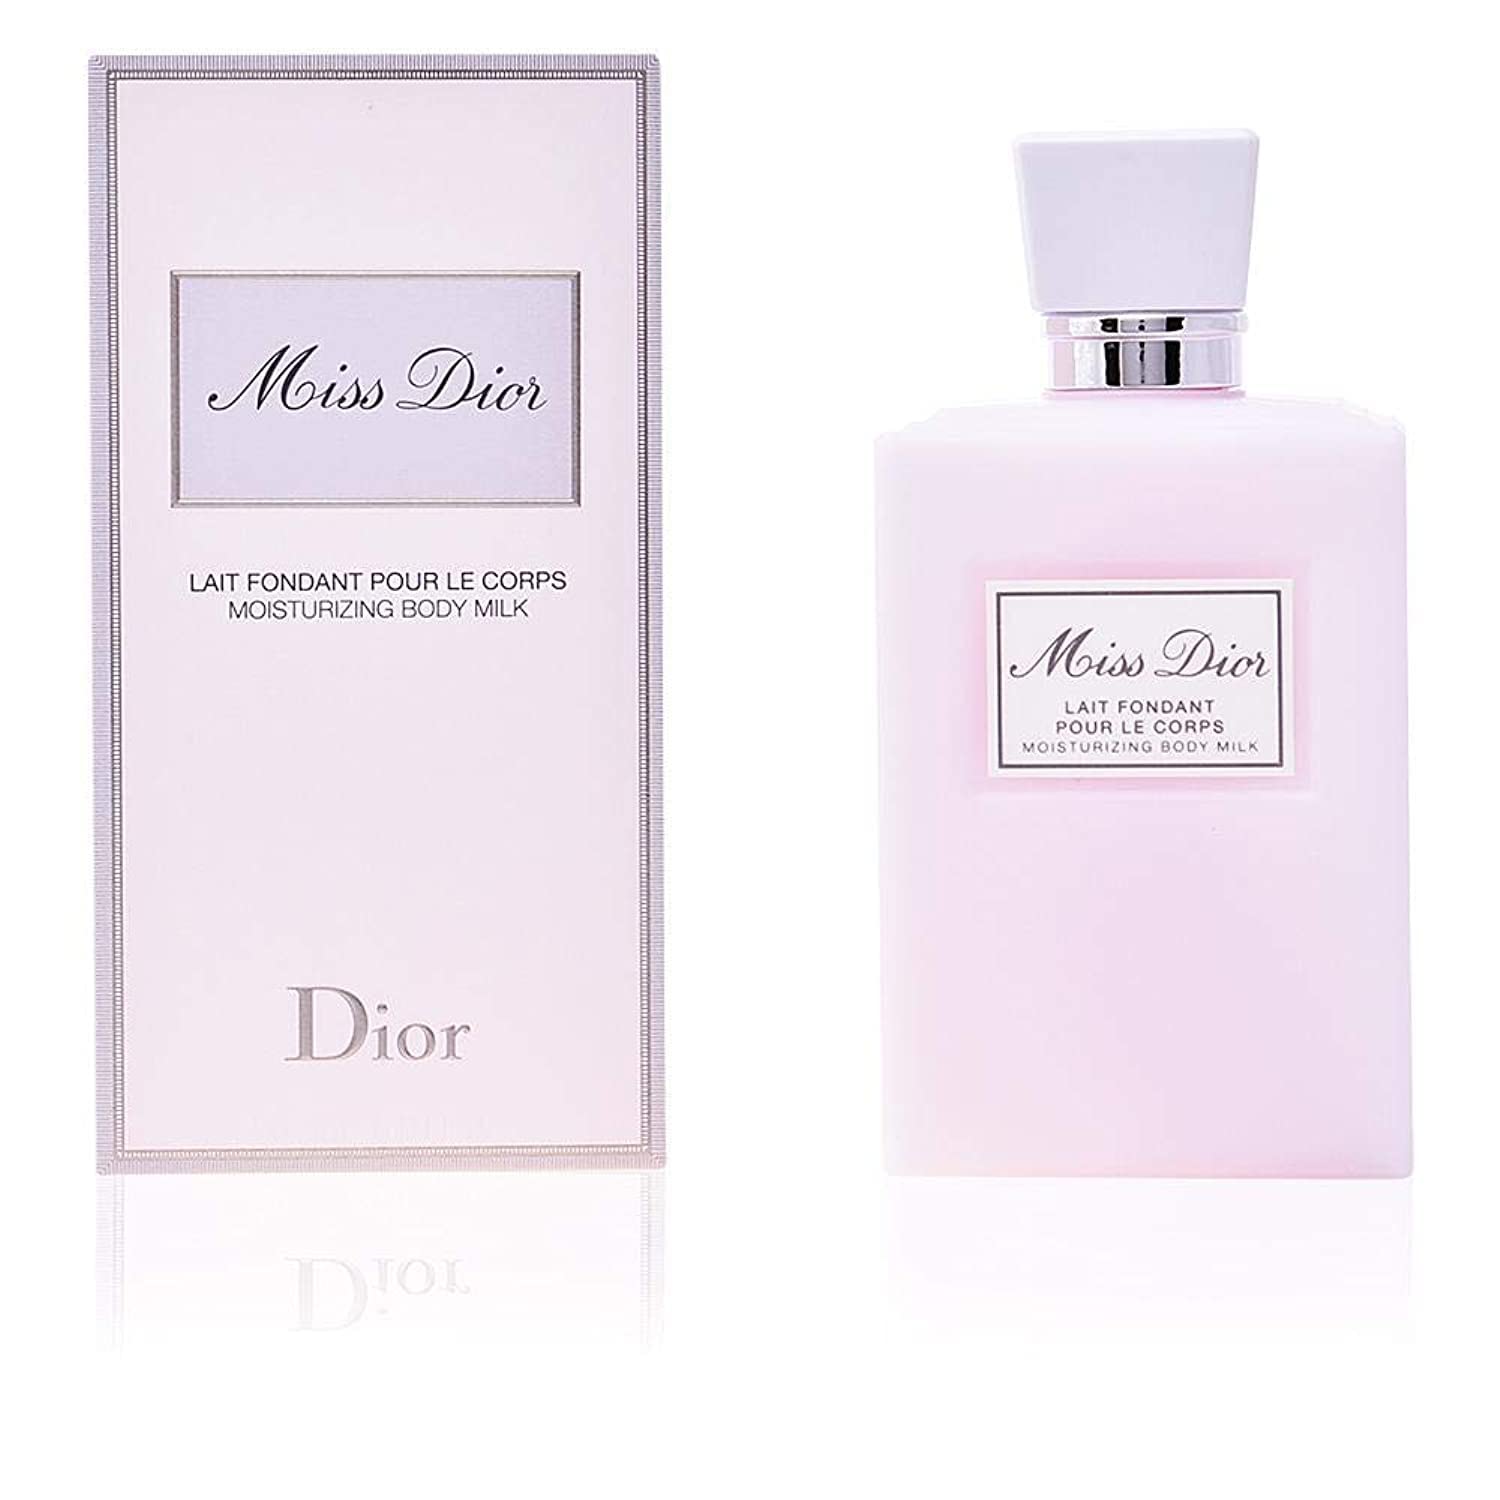 Miss Dior Cherie by Christian Dior for Women 6.8 oz Body Moisturizer